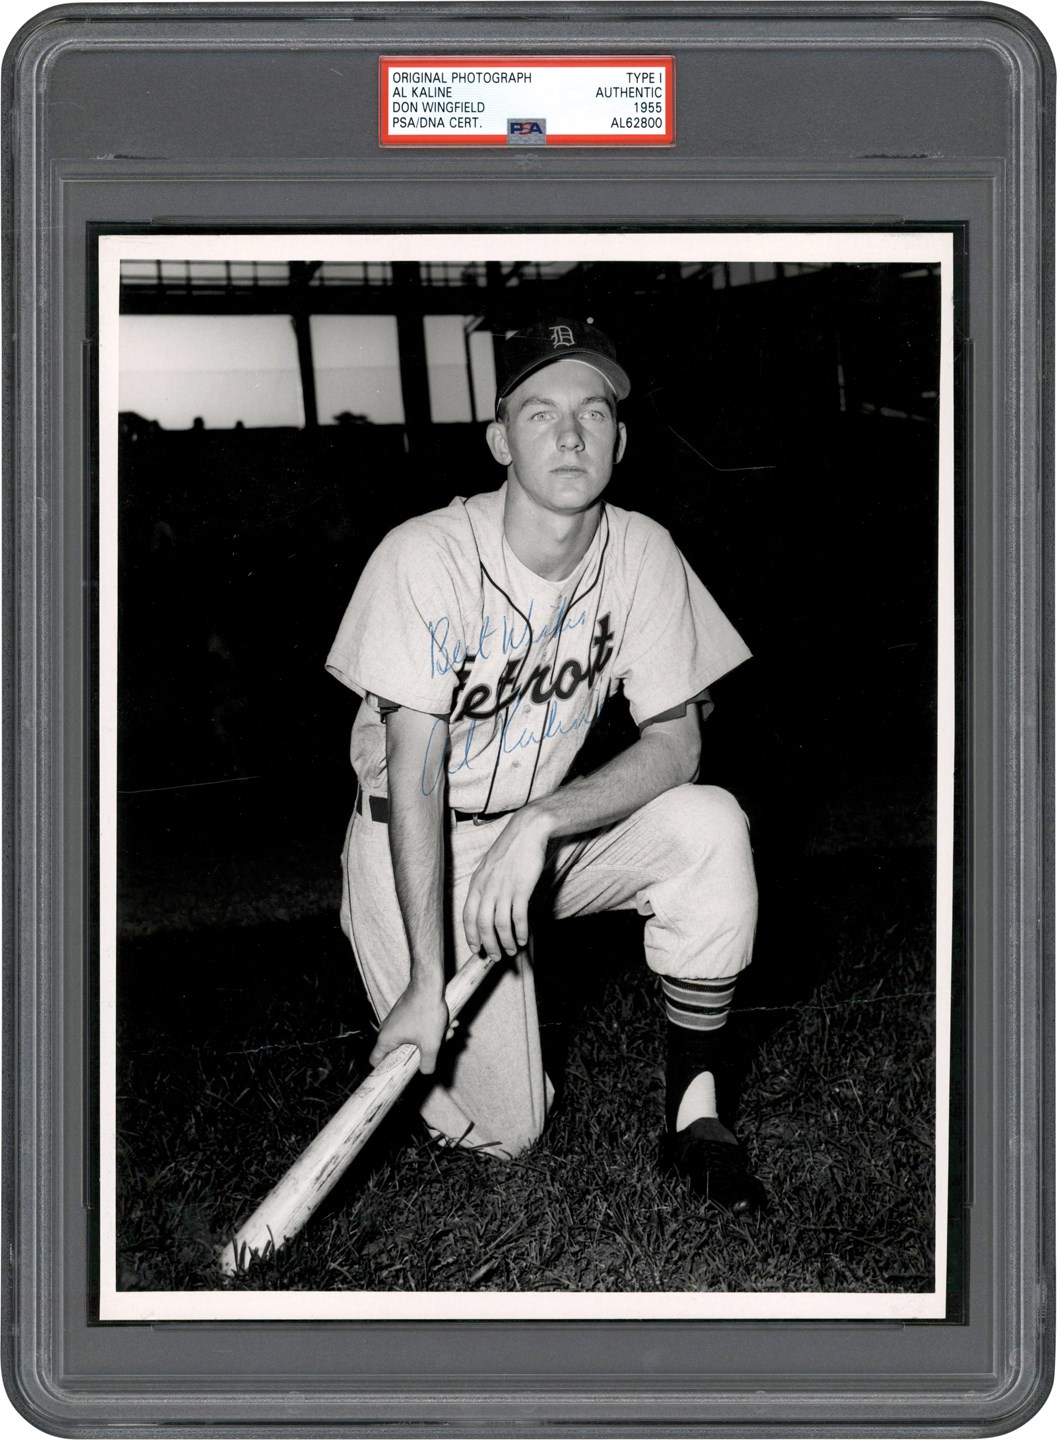 Baseball Autographs - Stunning 1955 Al Kaline Signed Photograph by Don Wingfield (PSA Type I)